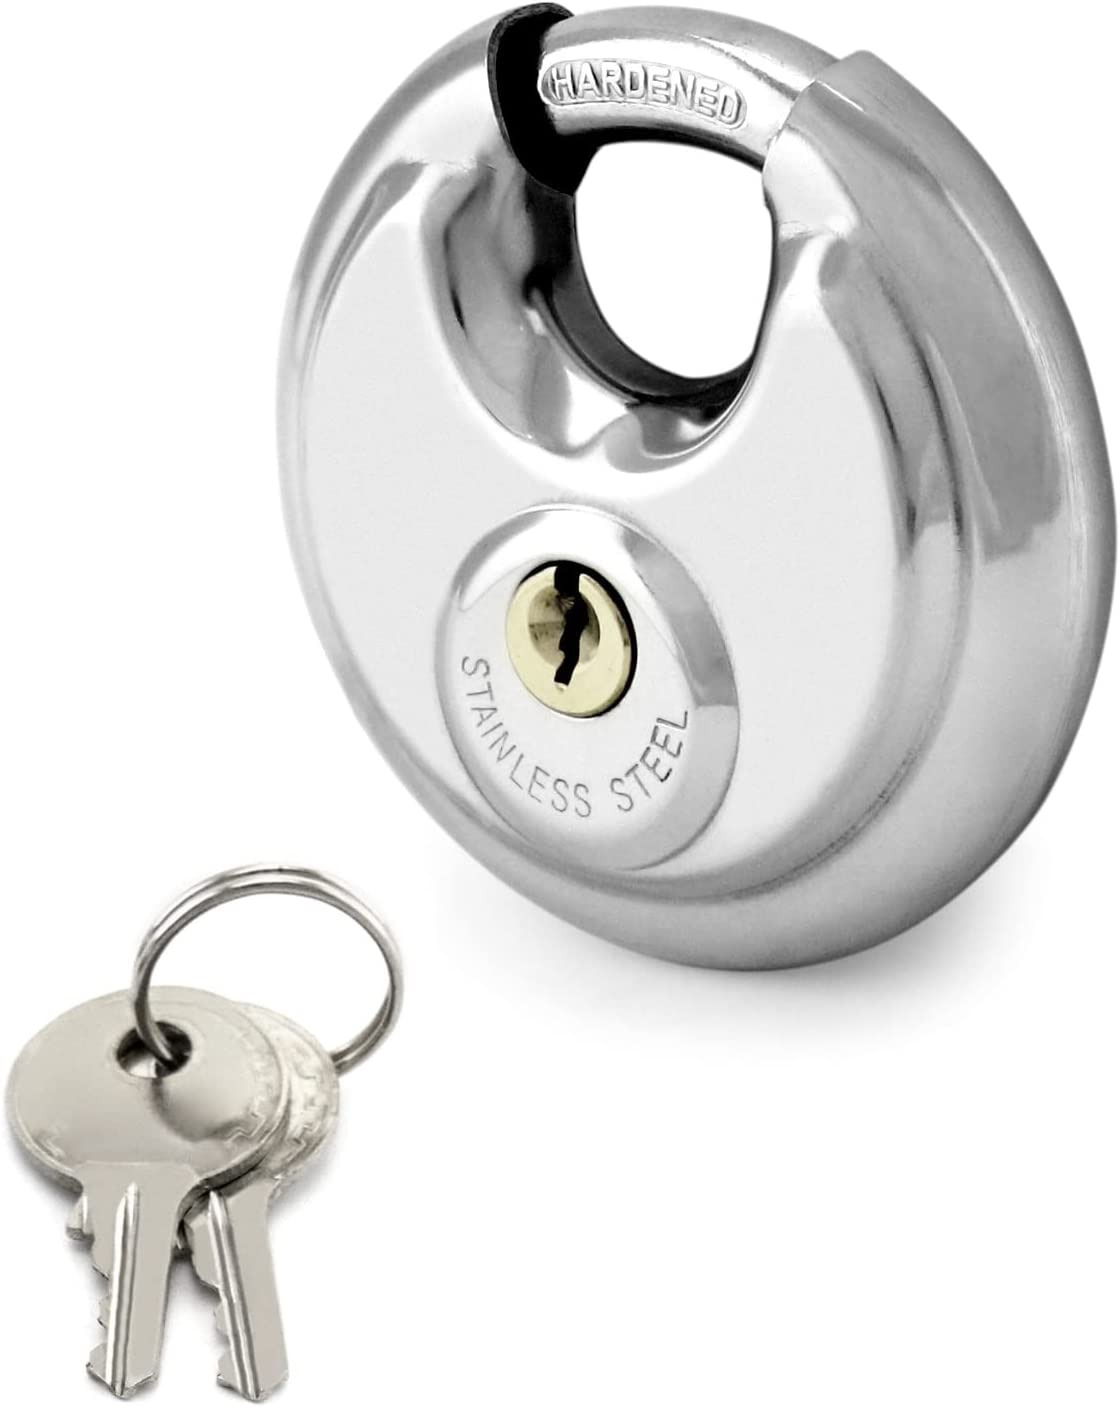 QWORK Disc Locks, 1 Pack Heavy Duty Steel Keyed Padlock Disc Storage Locks for S